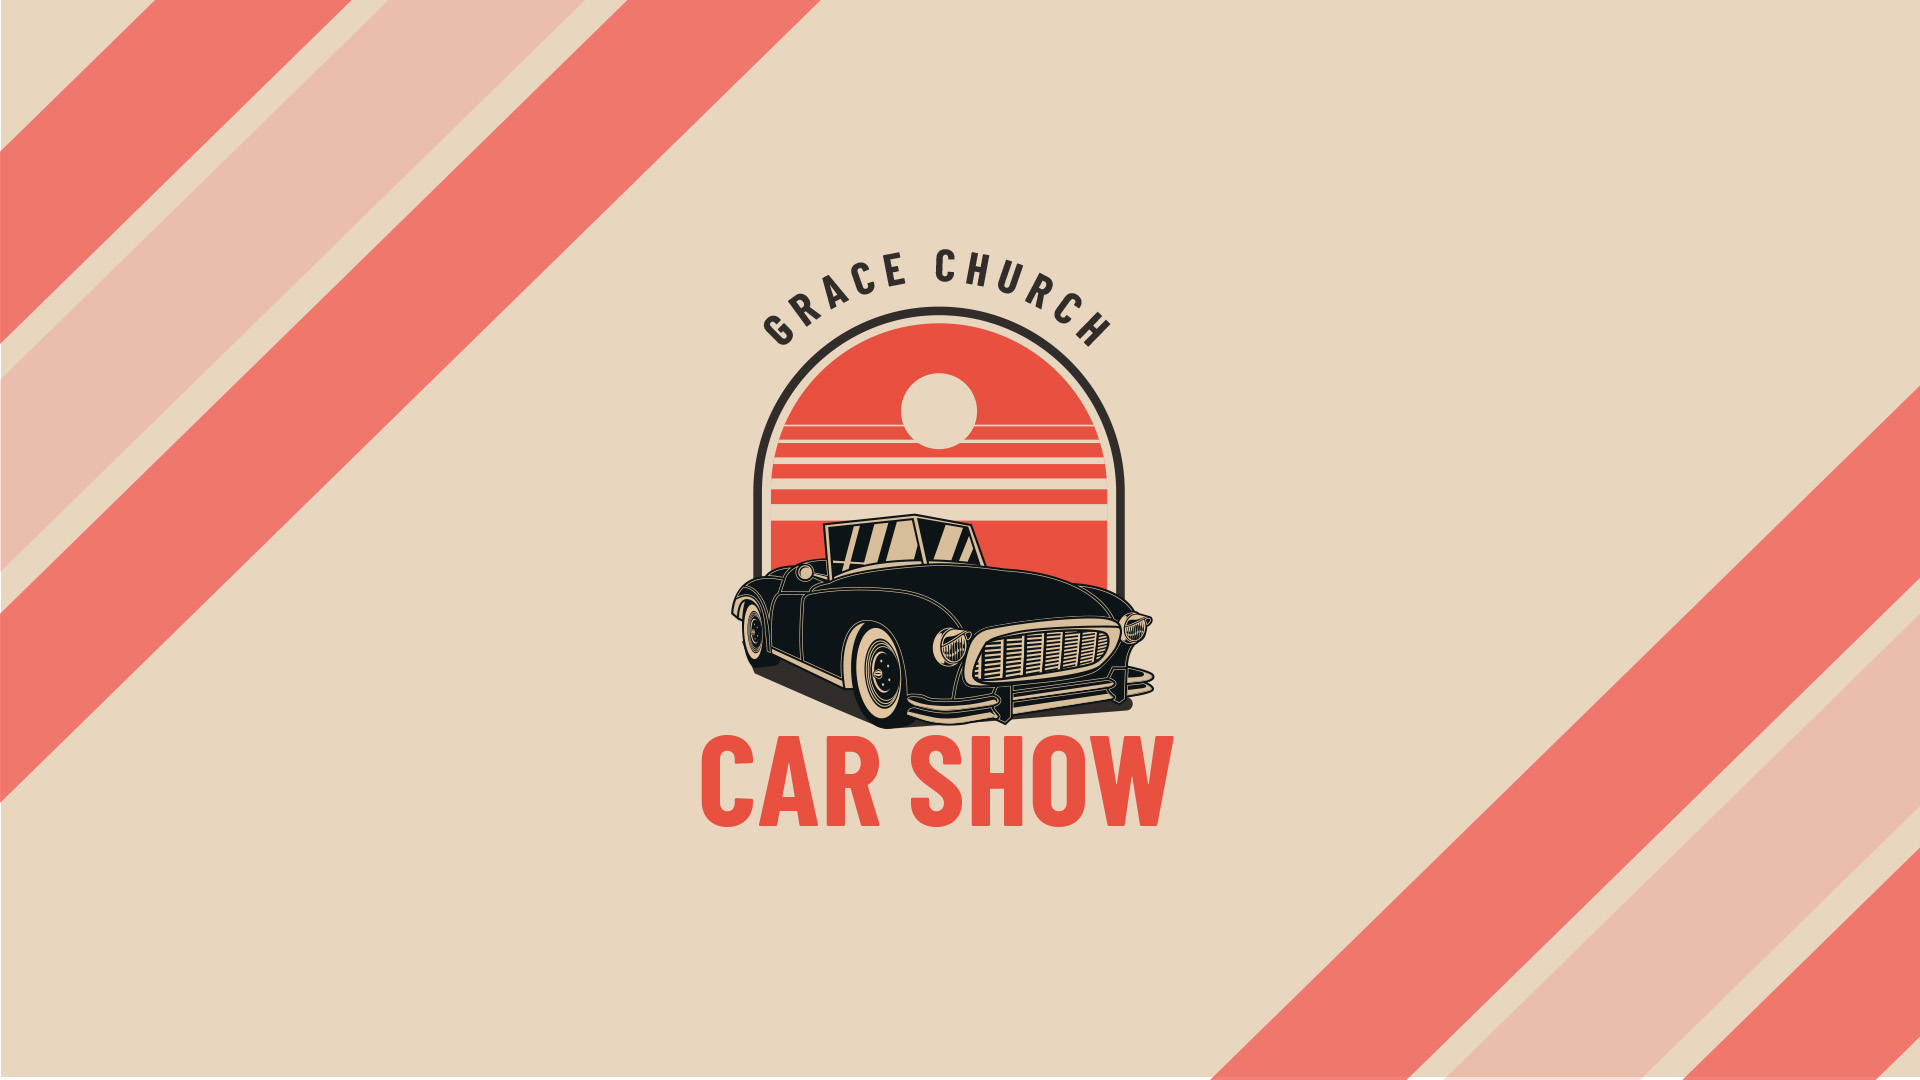 Car Show

Saturday | September 10
10:00am - 2:00pm
